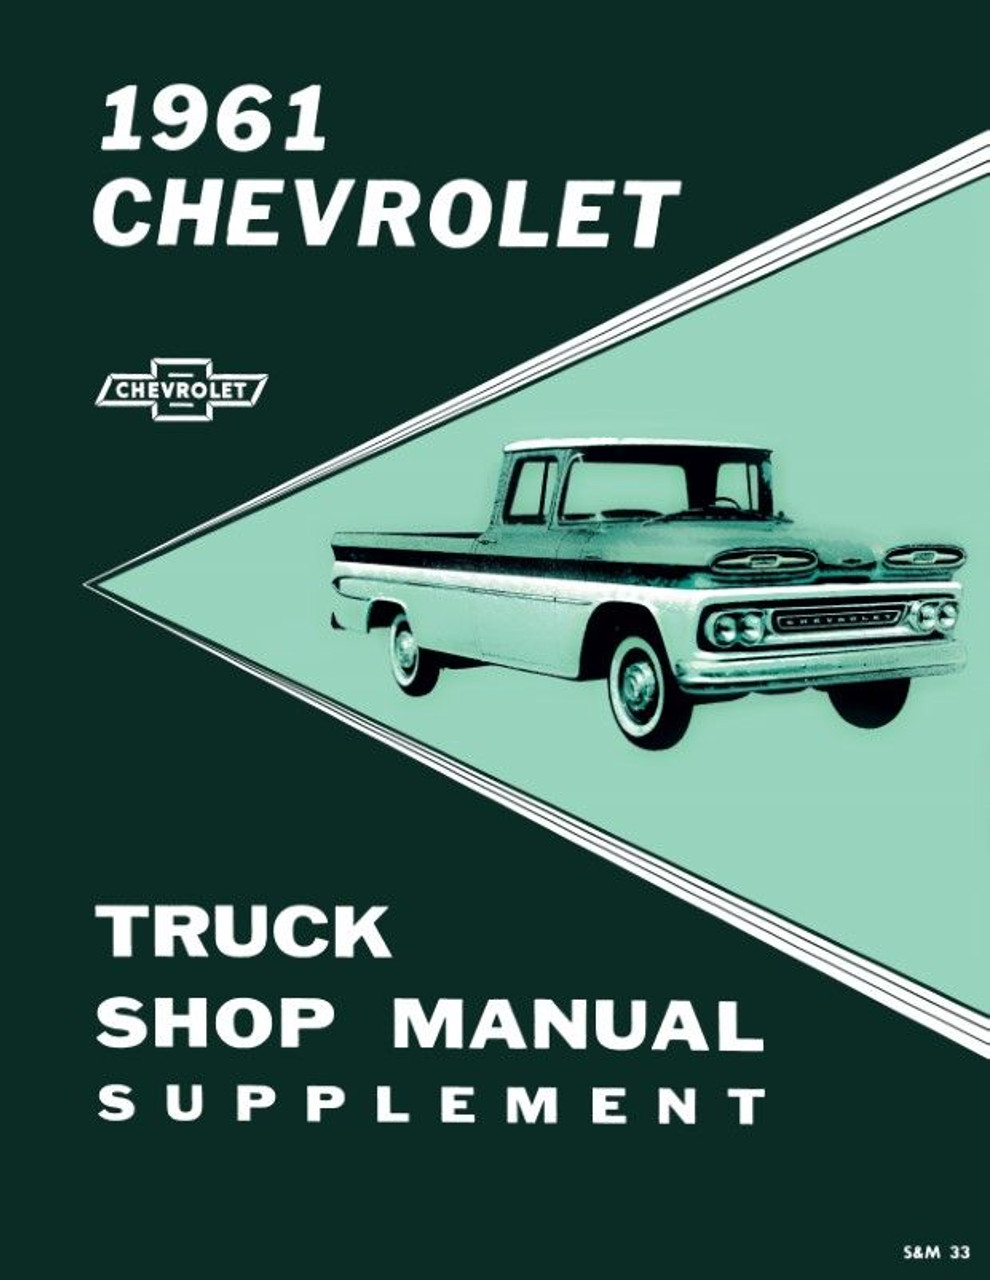 Shop Manual for 1961 Chevrolet Trucks [Supplement]